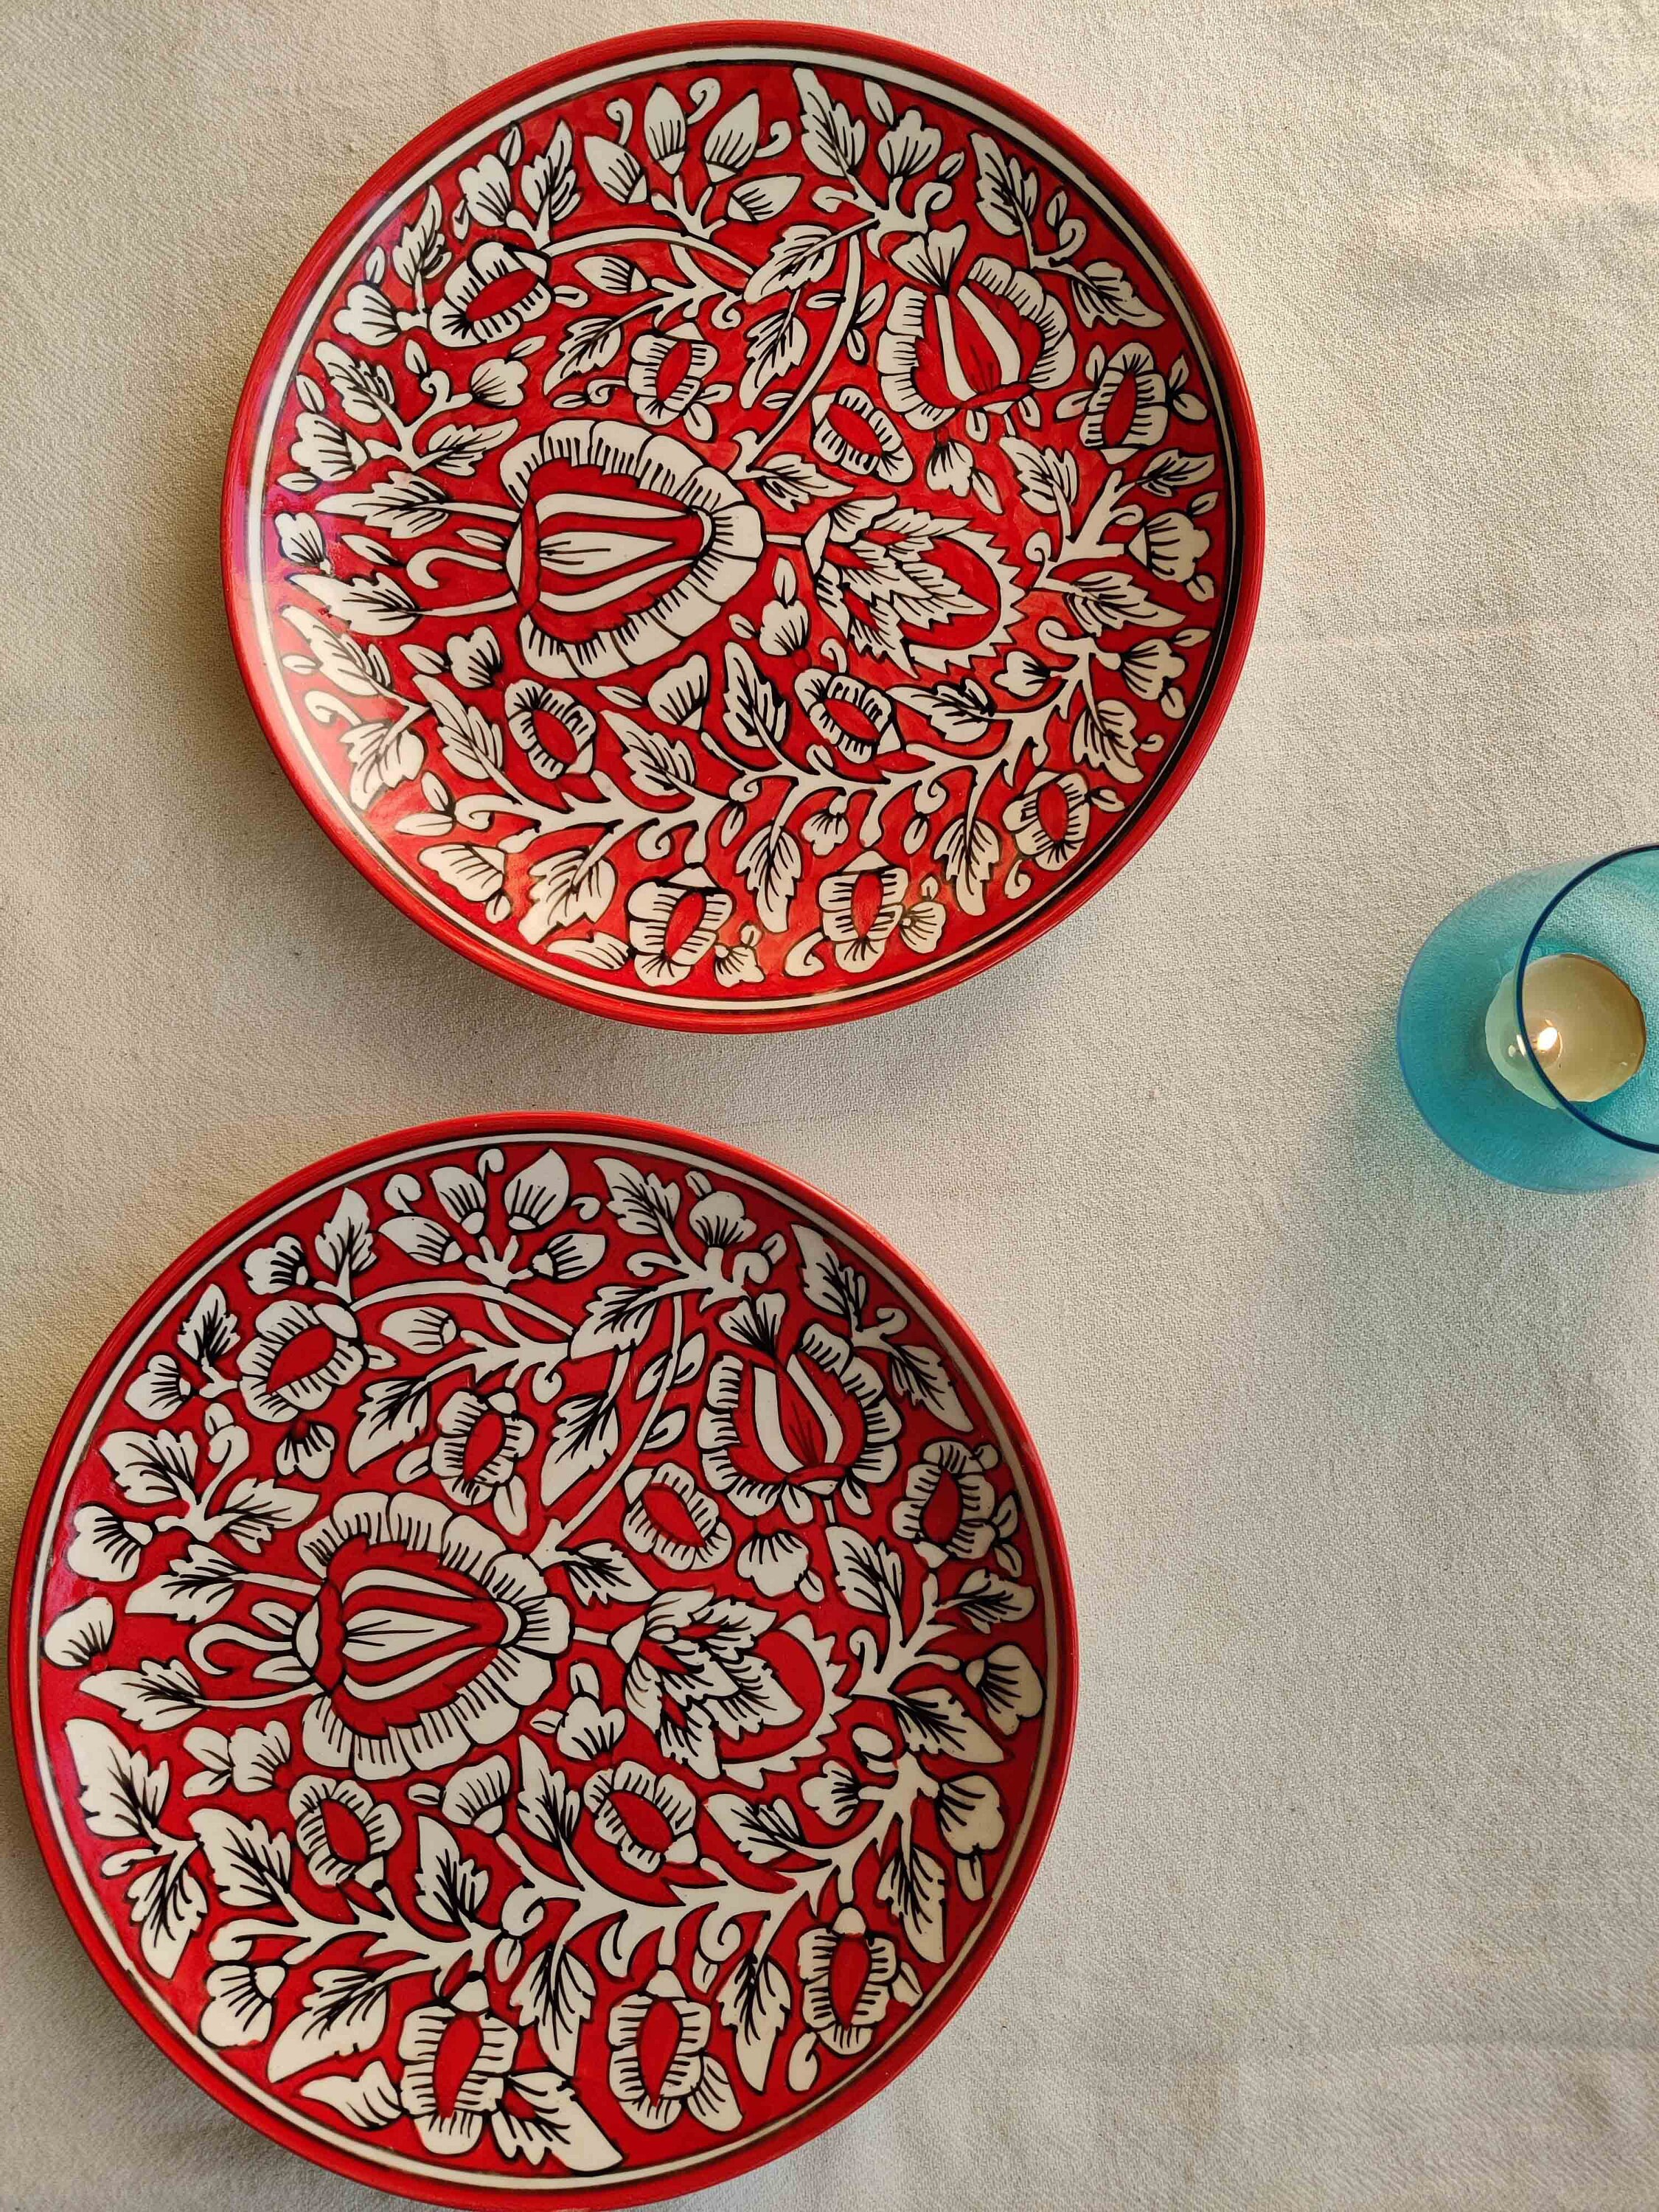 Atrangii Handmade Ceramic Dinner Plates - Ensemble de 2, Rouge, 10 Pouces Diamètre